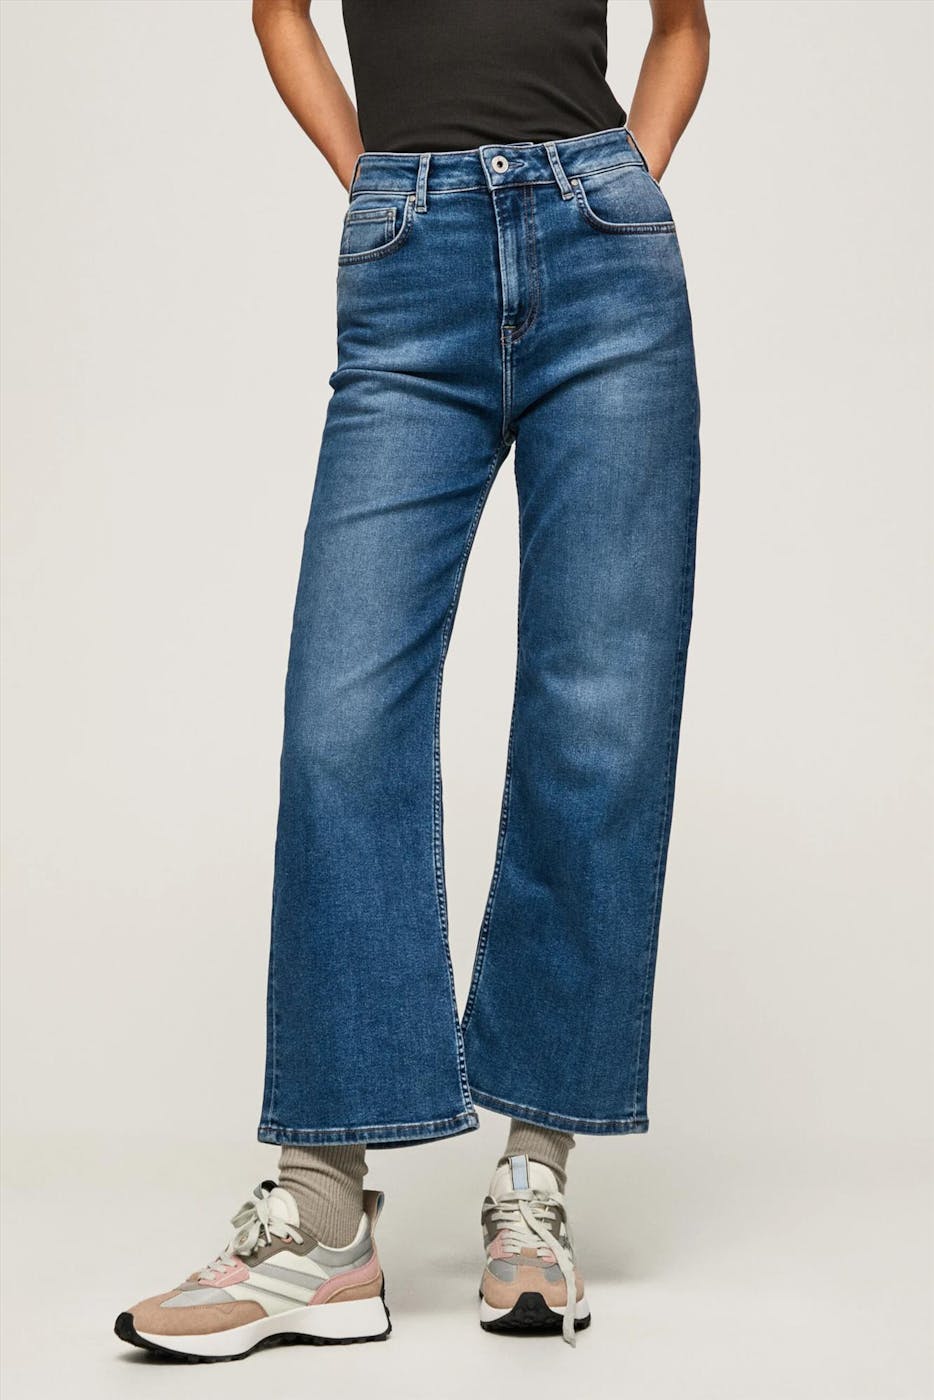 Pepe Jeans London - Blauwe Lexa Sky High jeans